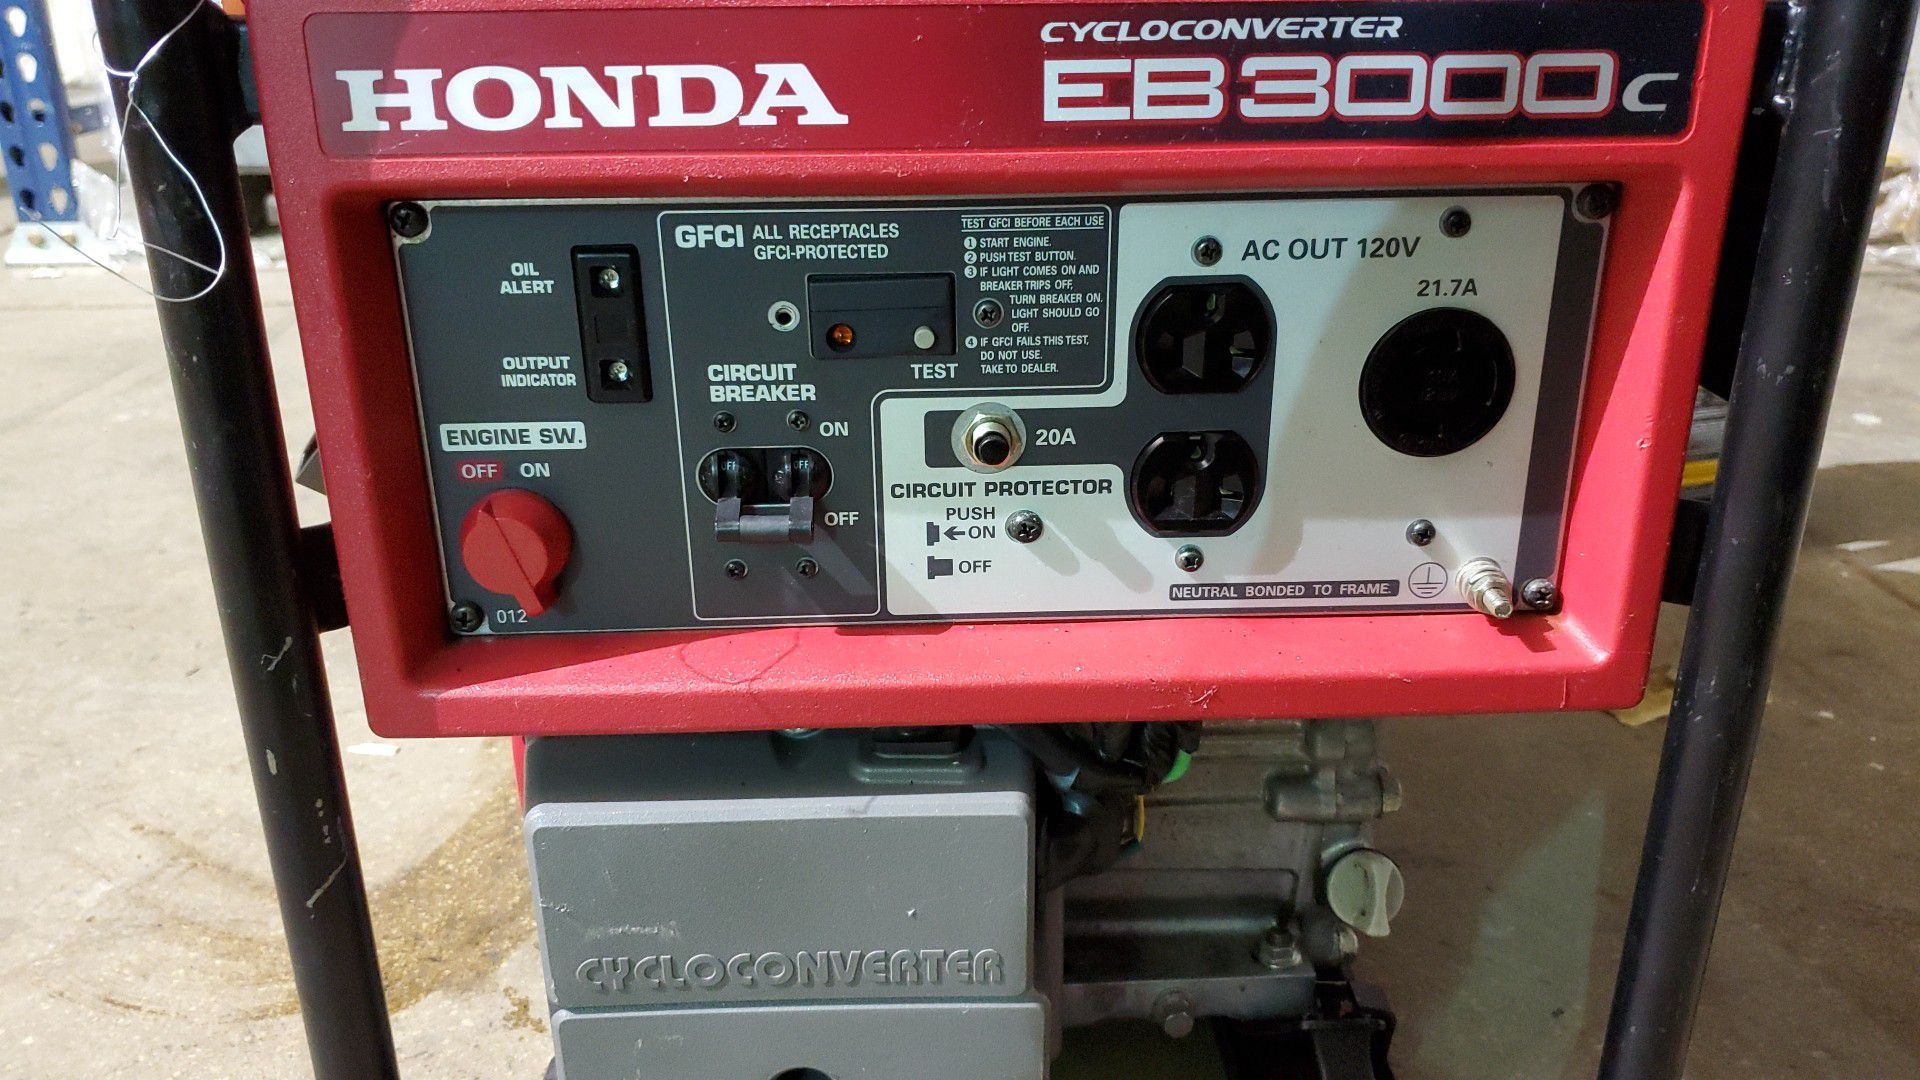 Honda 3000w generator like new, just serviced one pull start